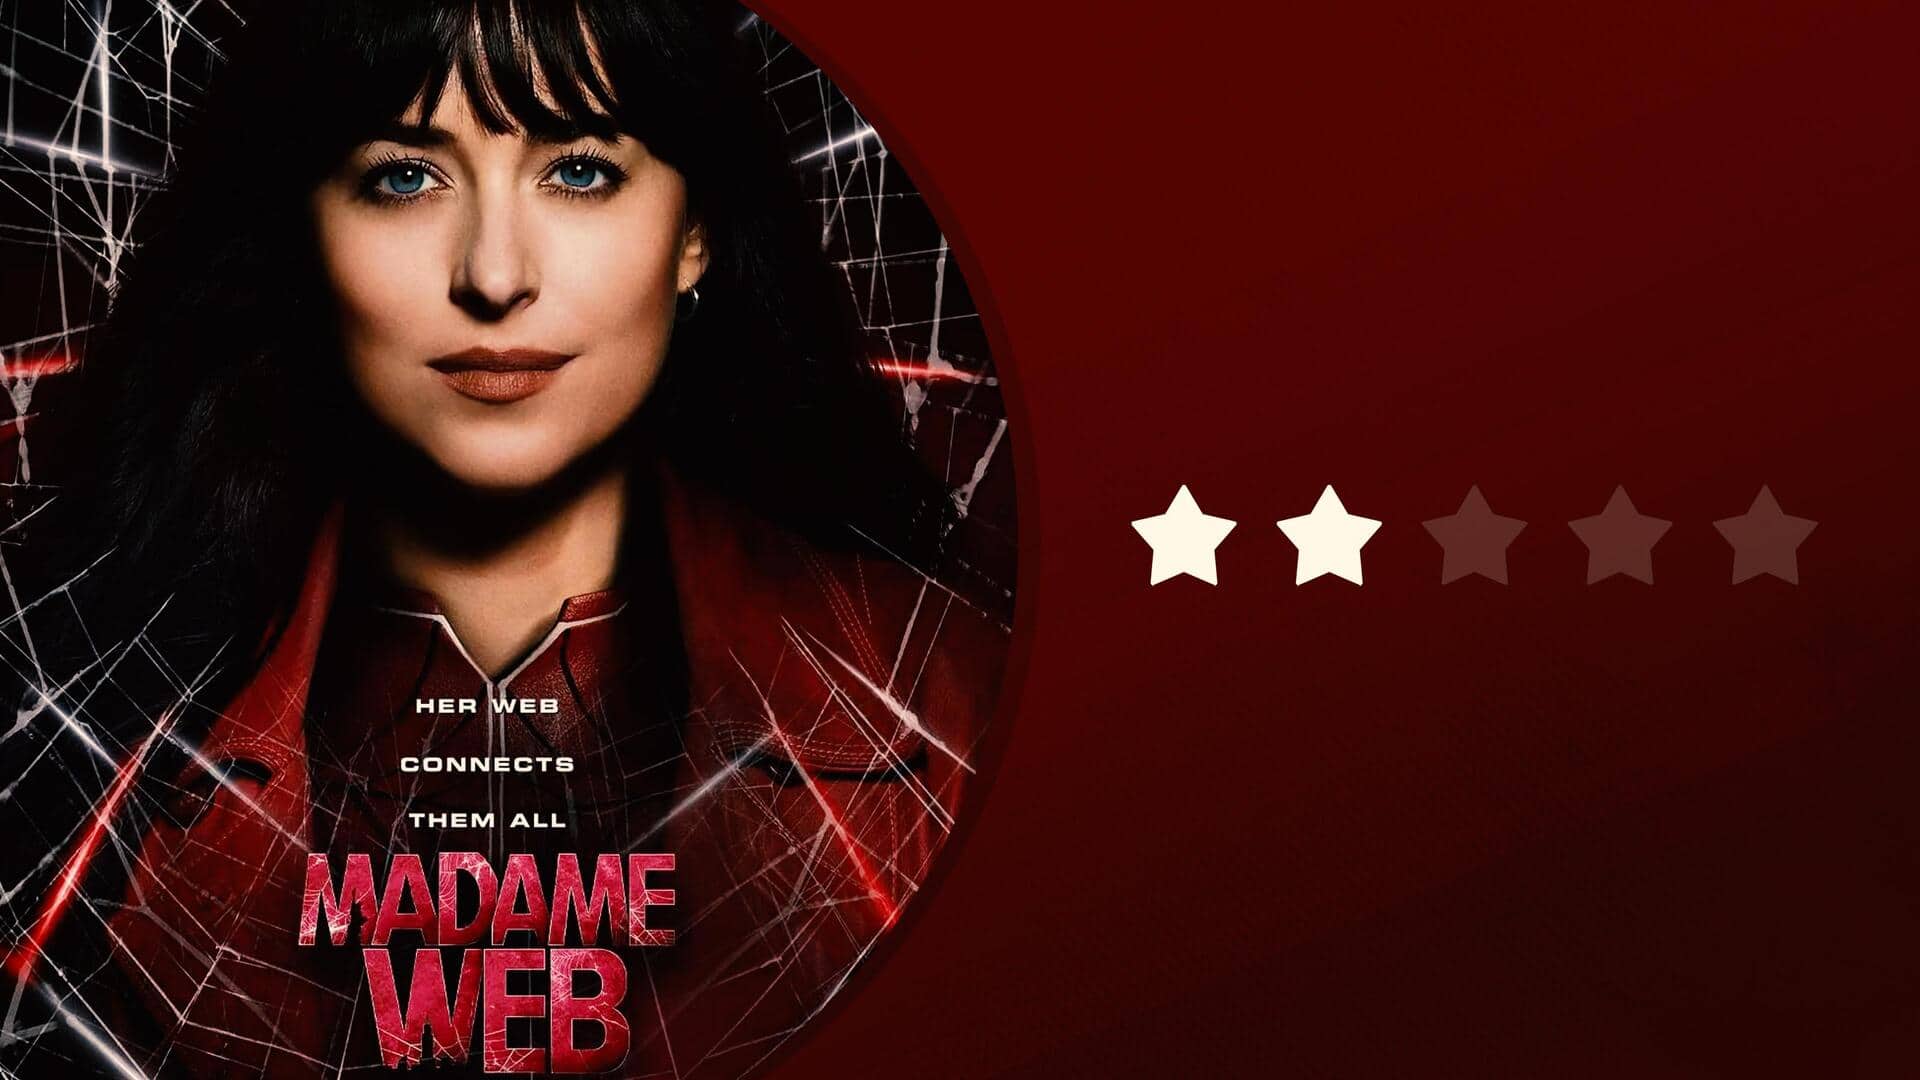 'Madame Web' review: Dakota Johnson's superhero film ain't no marvel